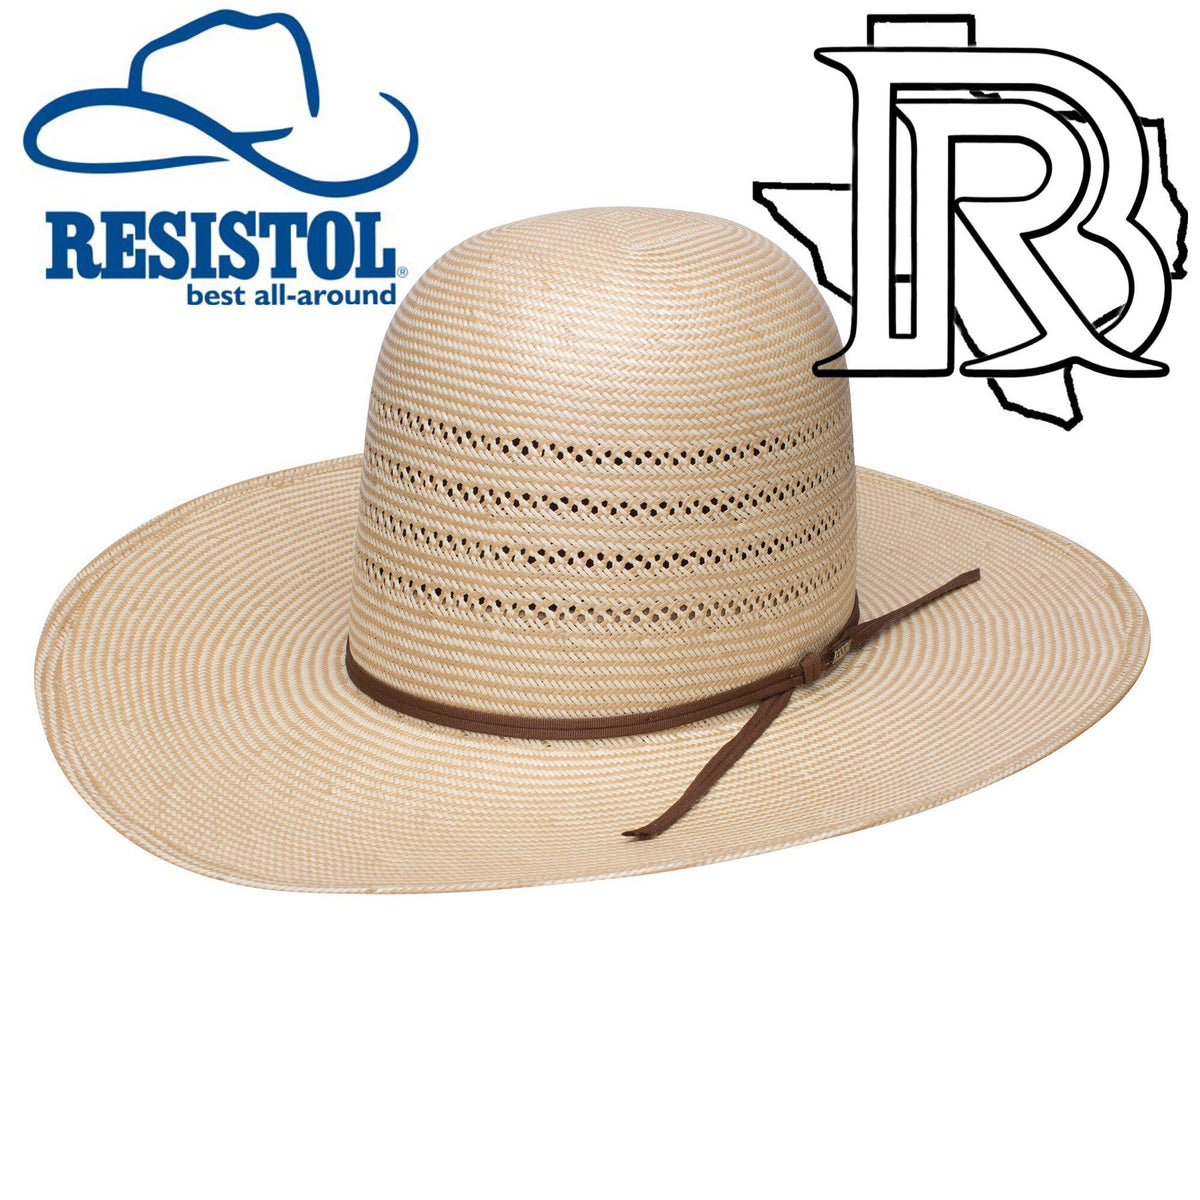 Top Hand 4.25 Brim Precreased Natural Straw Hat by Resistol